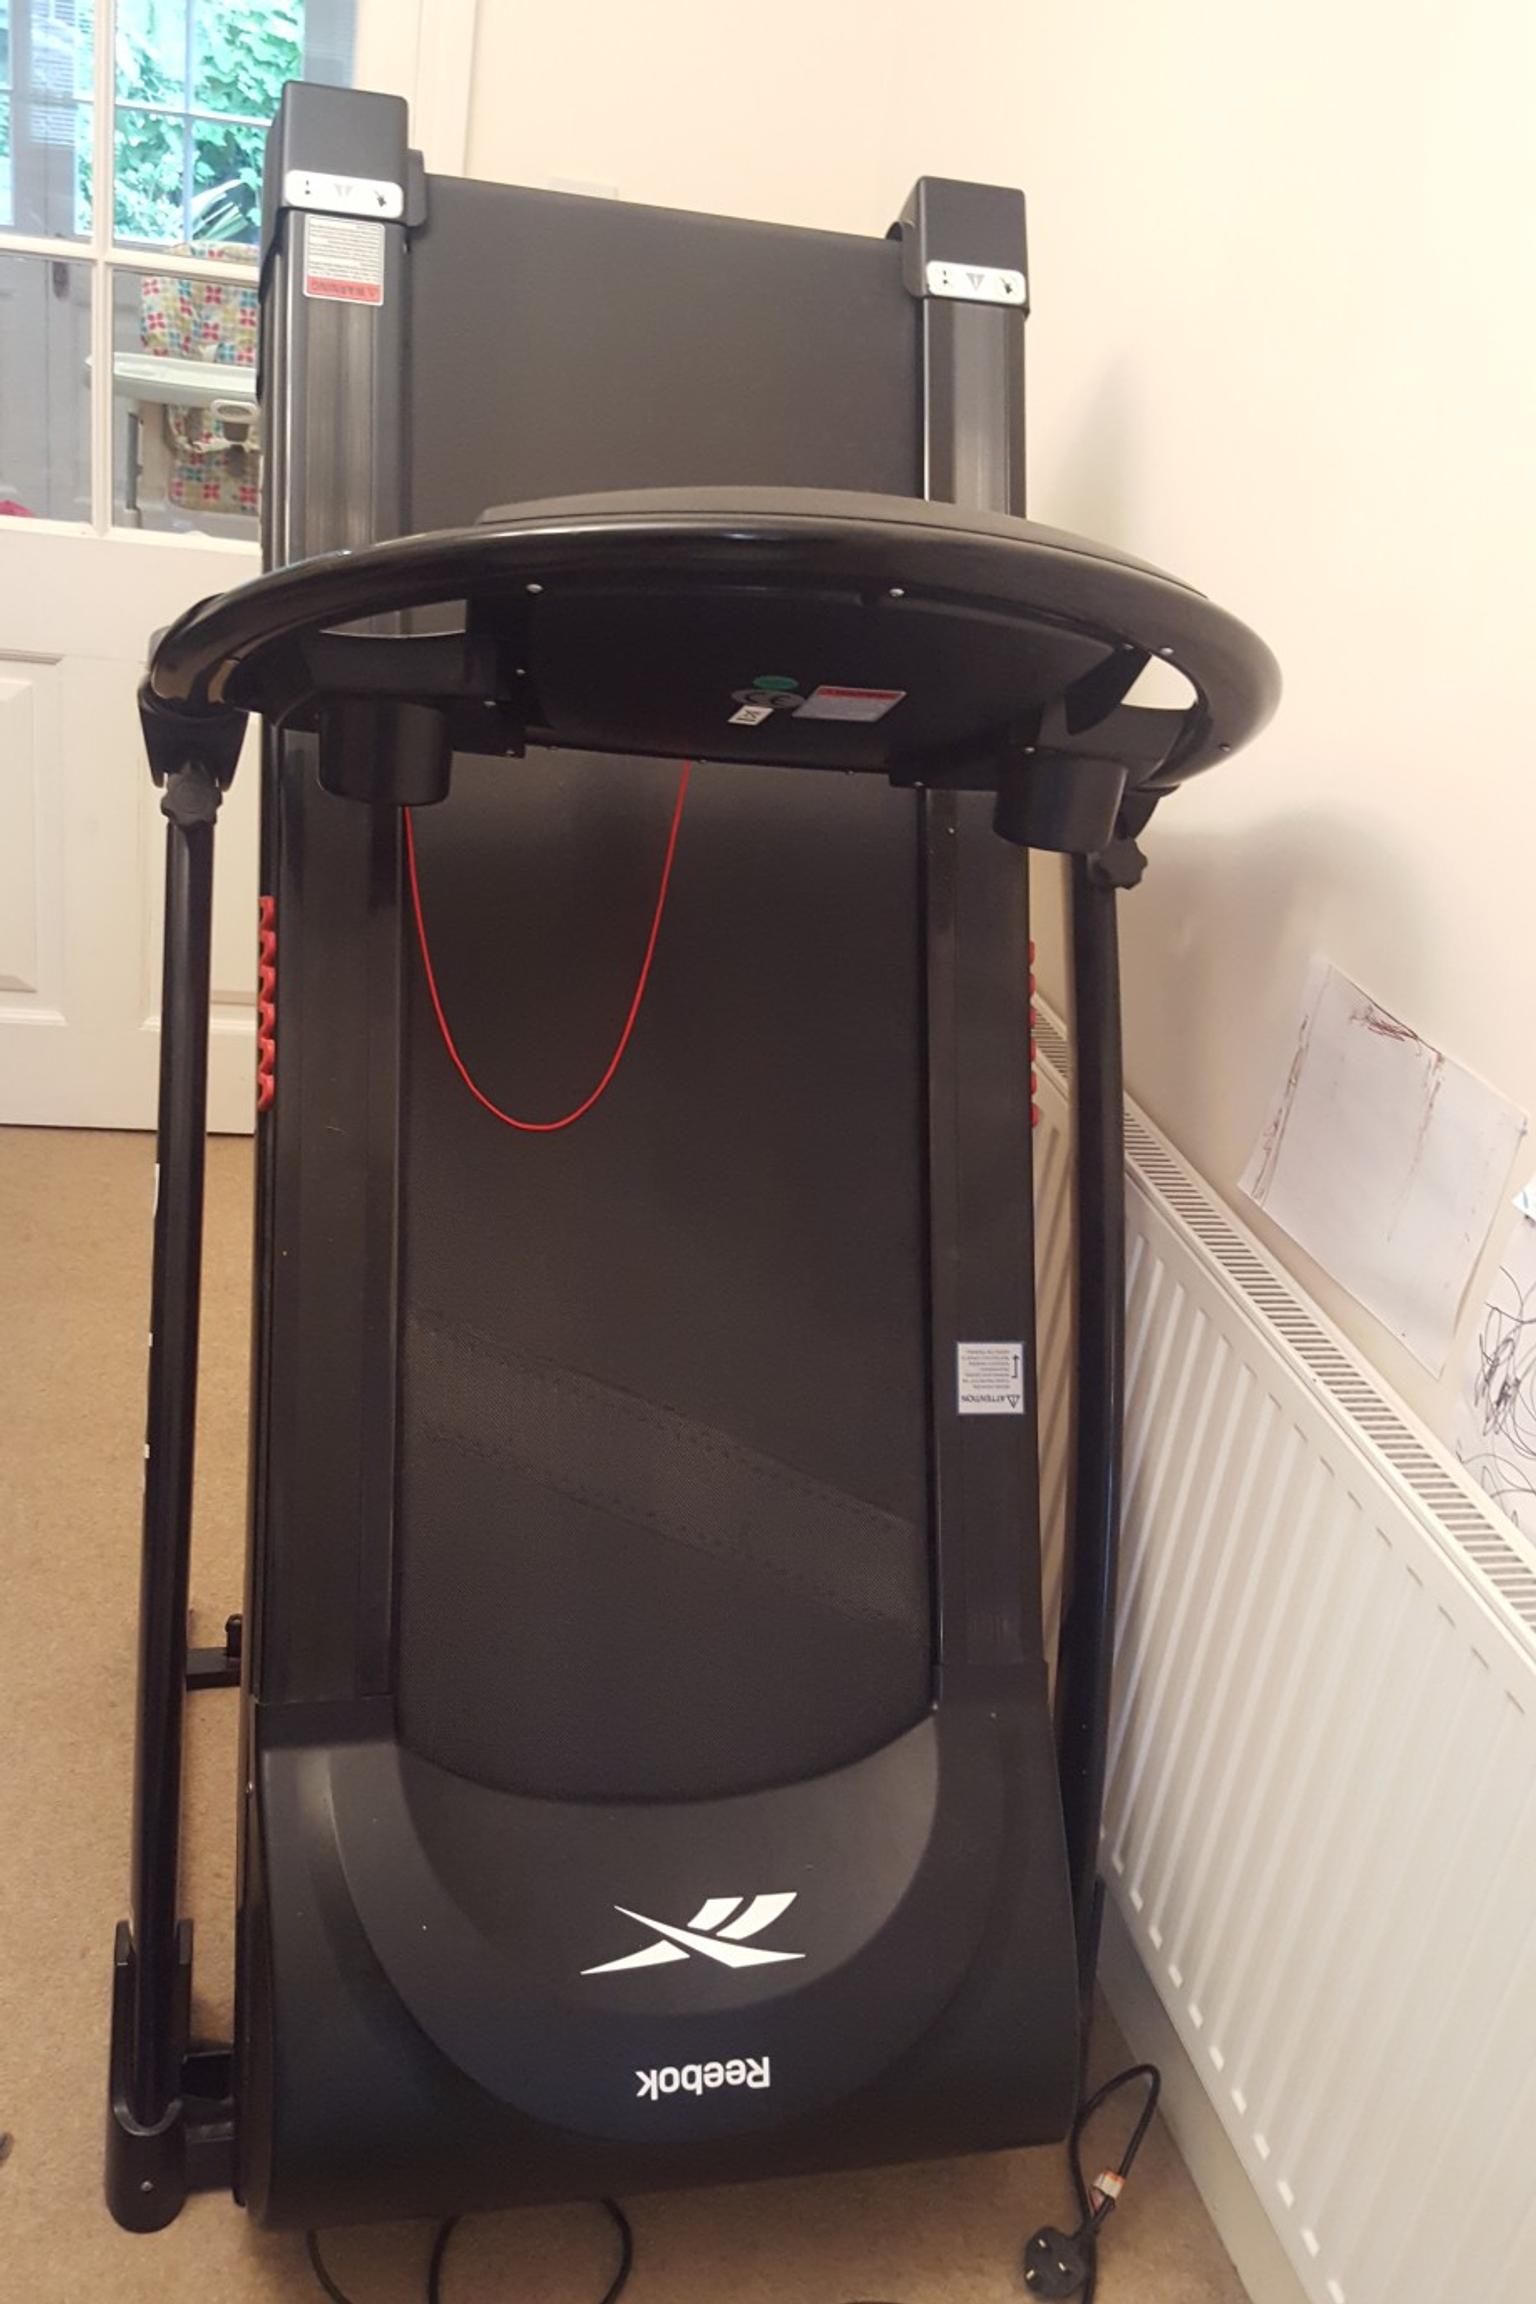 reebok zr9 treadmill for sale